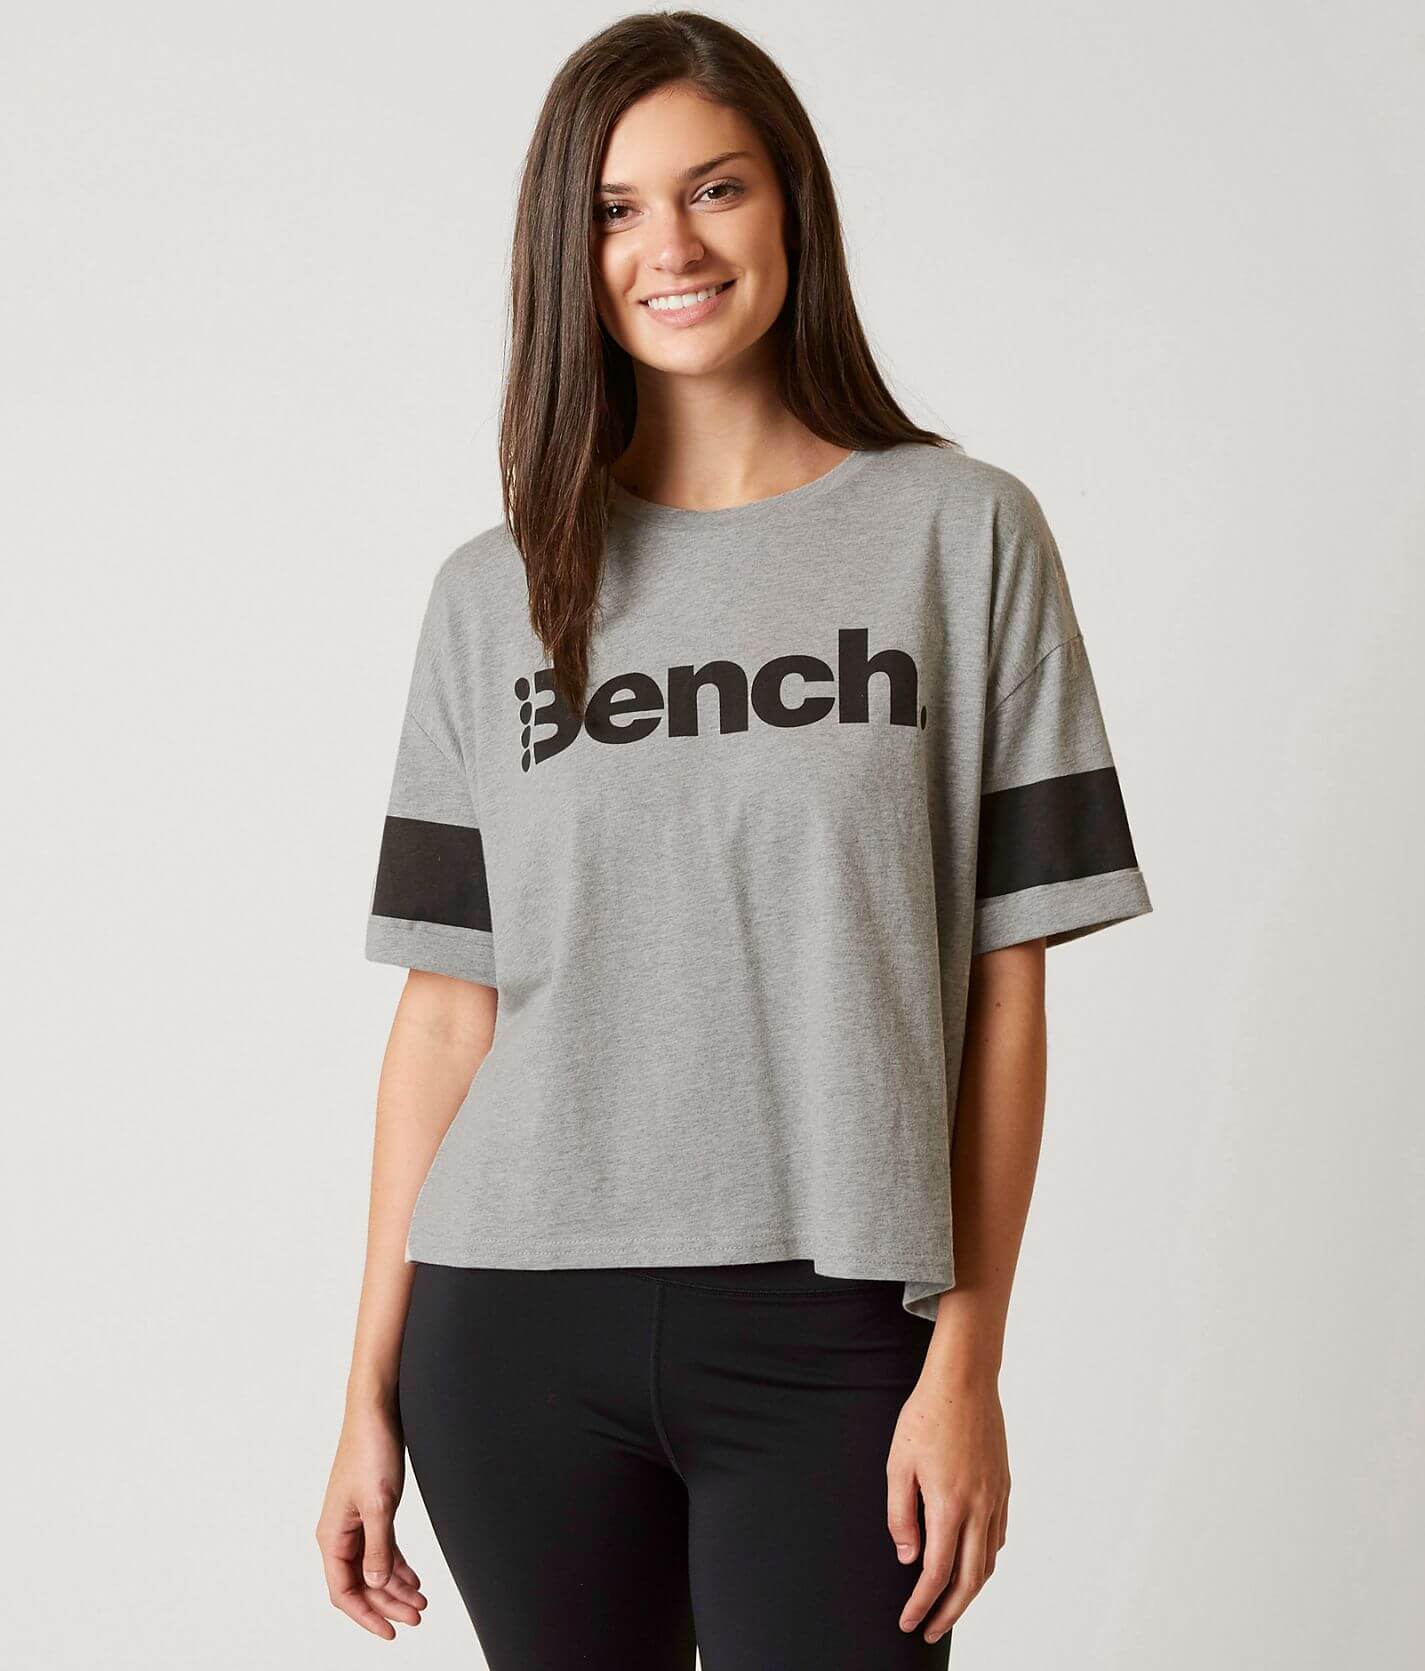 Marl Graphic T-Shirt in Bench - Buckle Grey | T-Shirts Women\'s